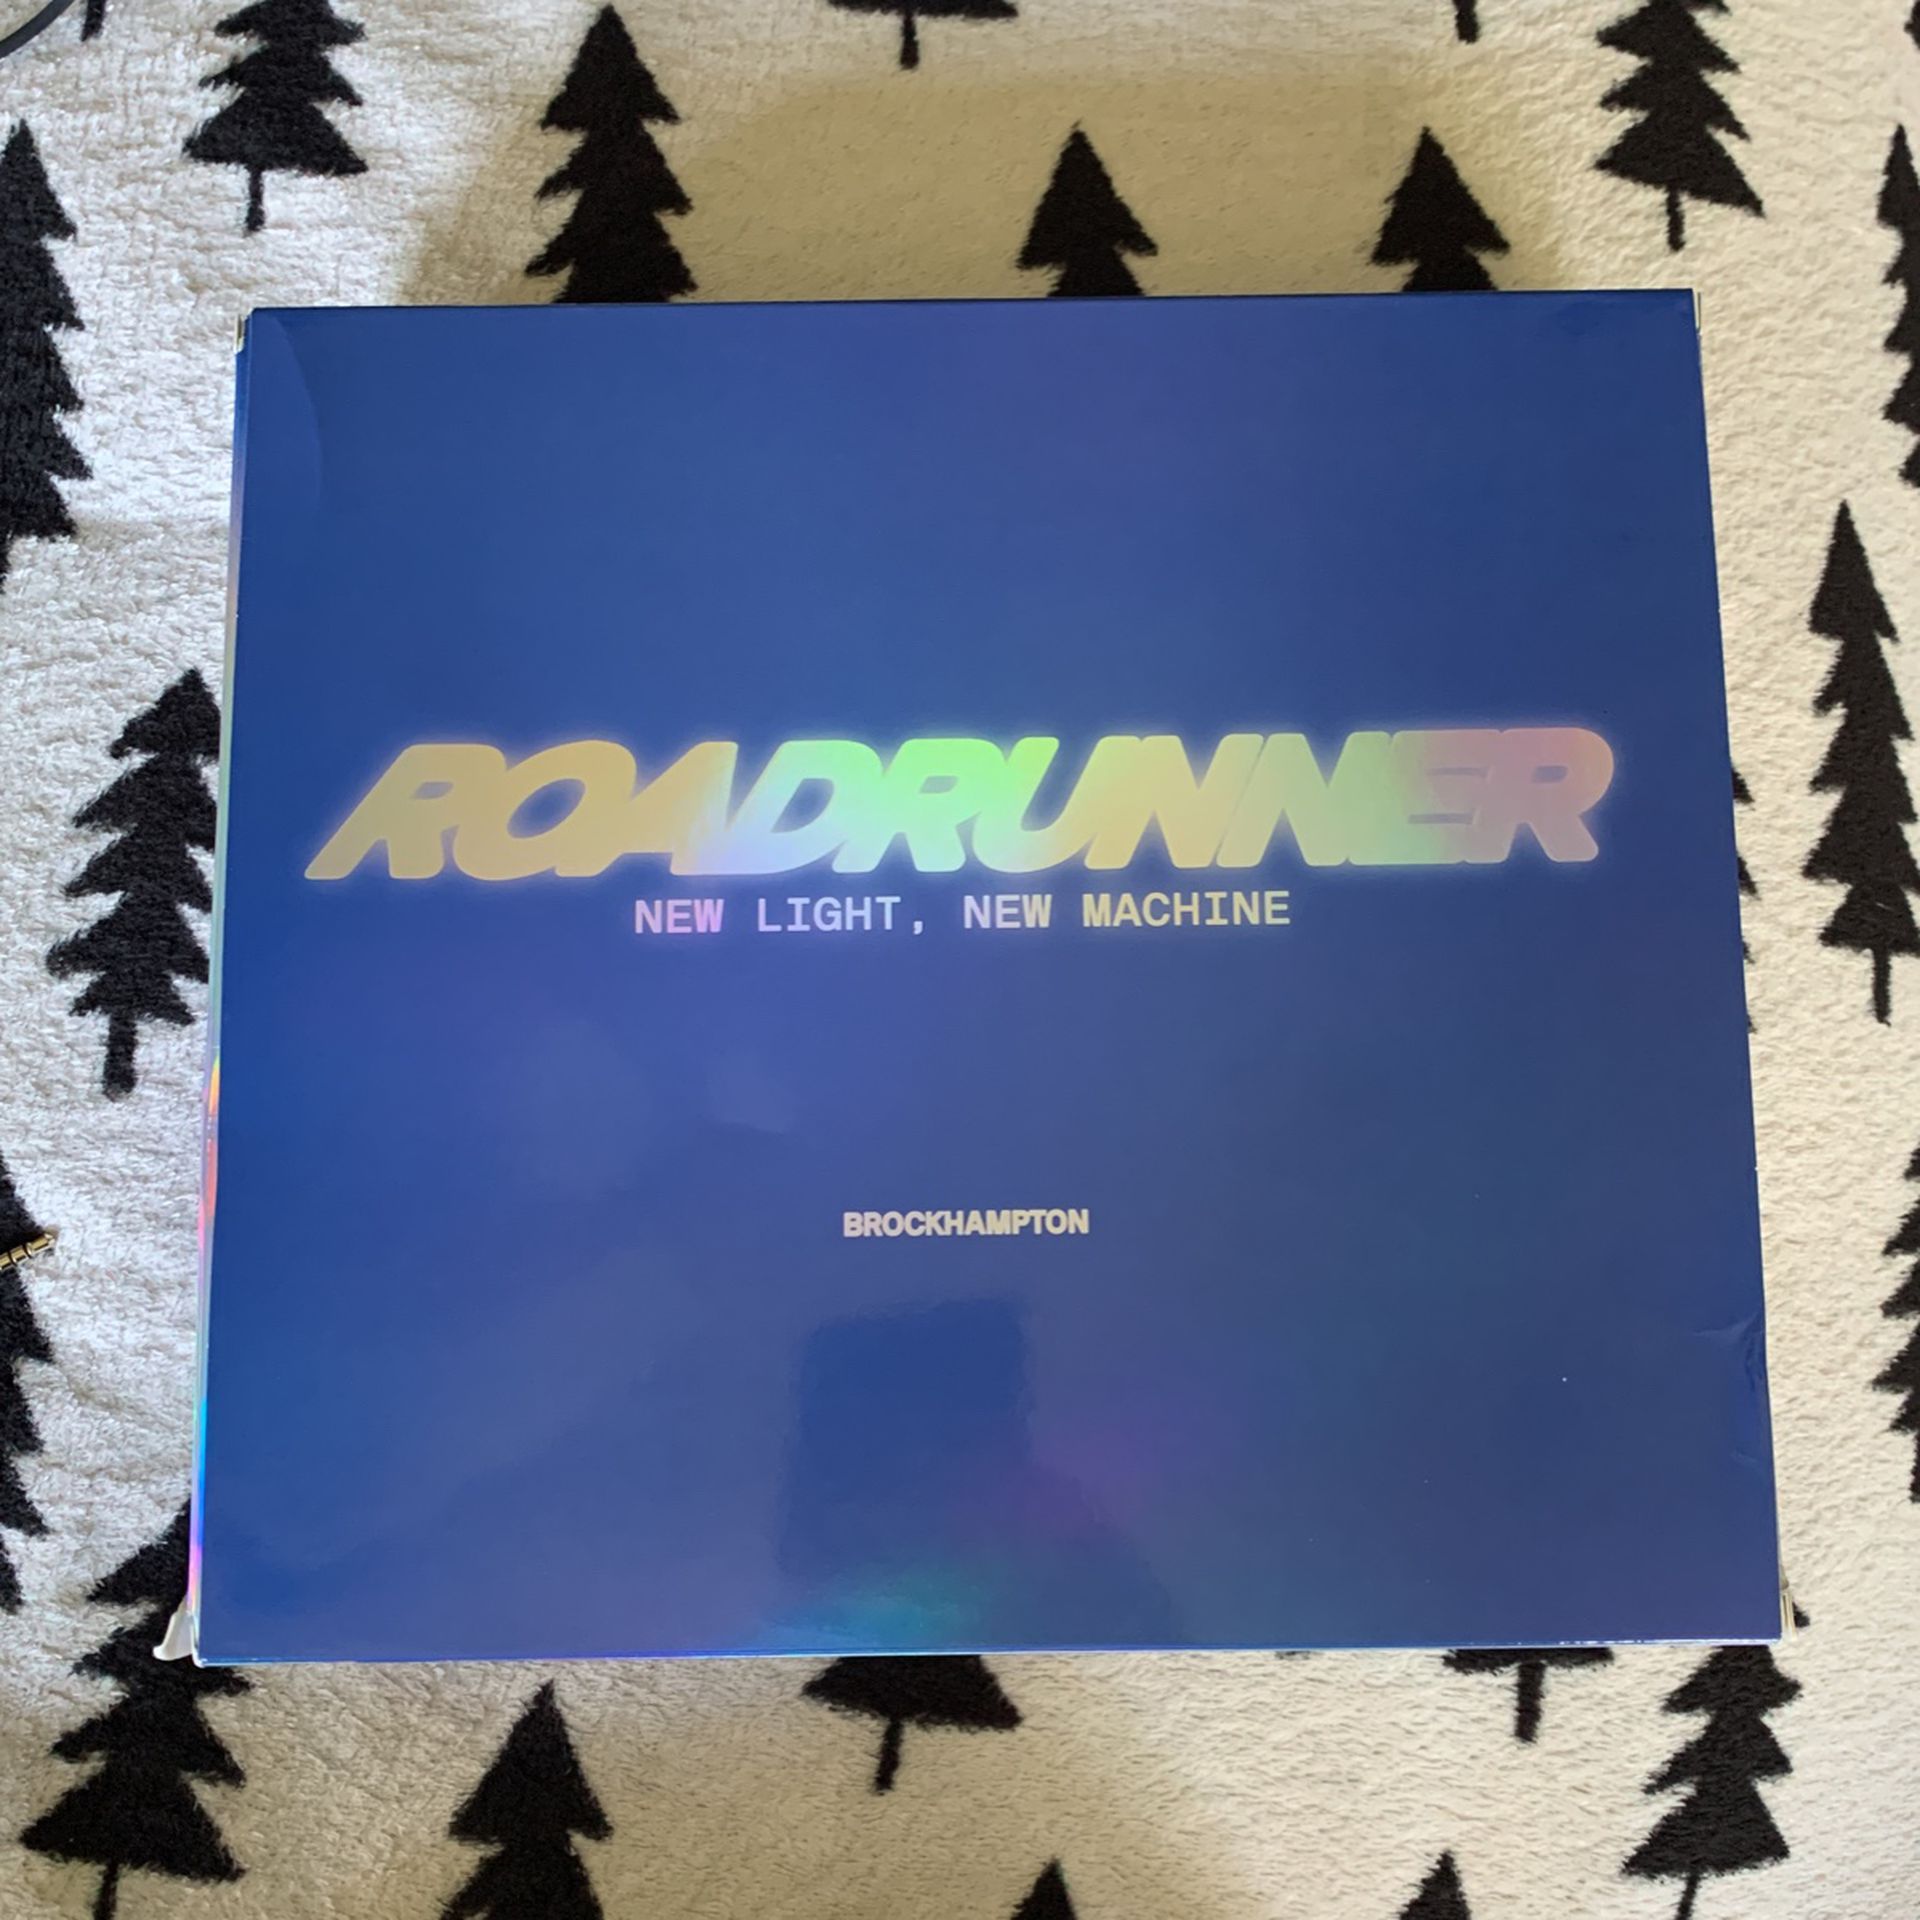 Brockhampton Roadrunner Deluxe Album Box